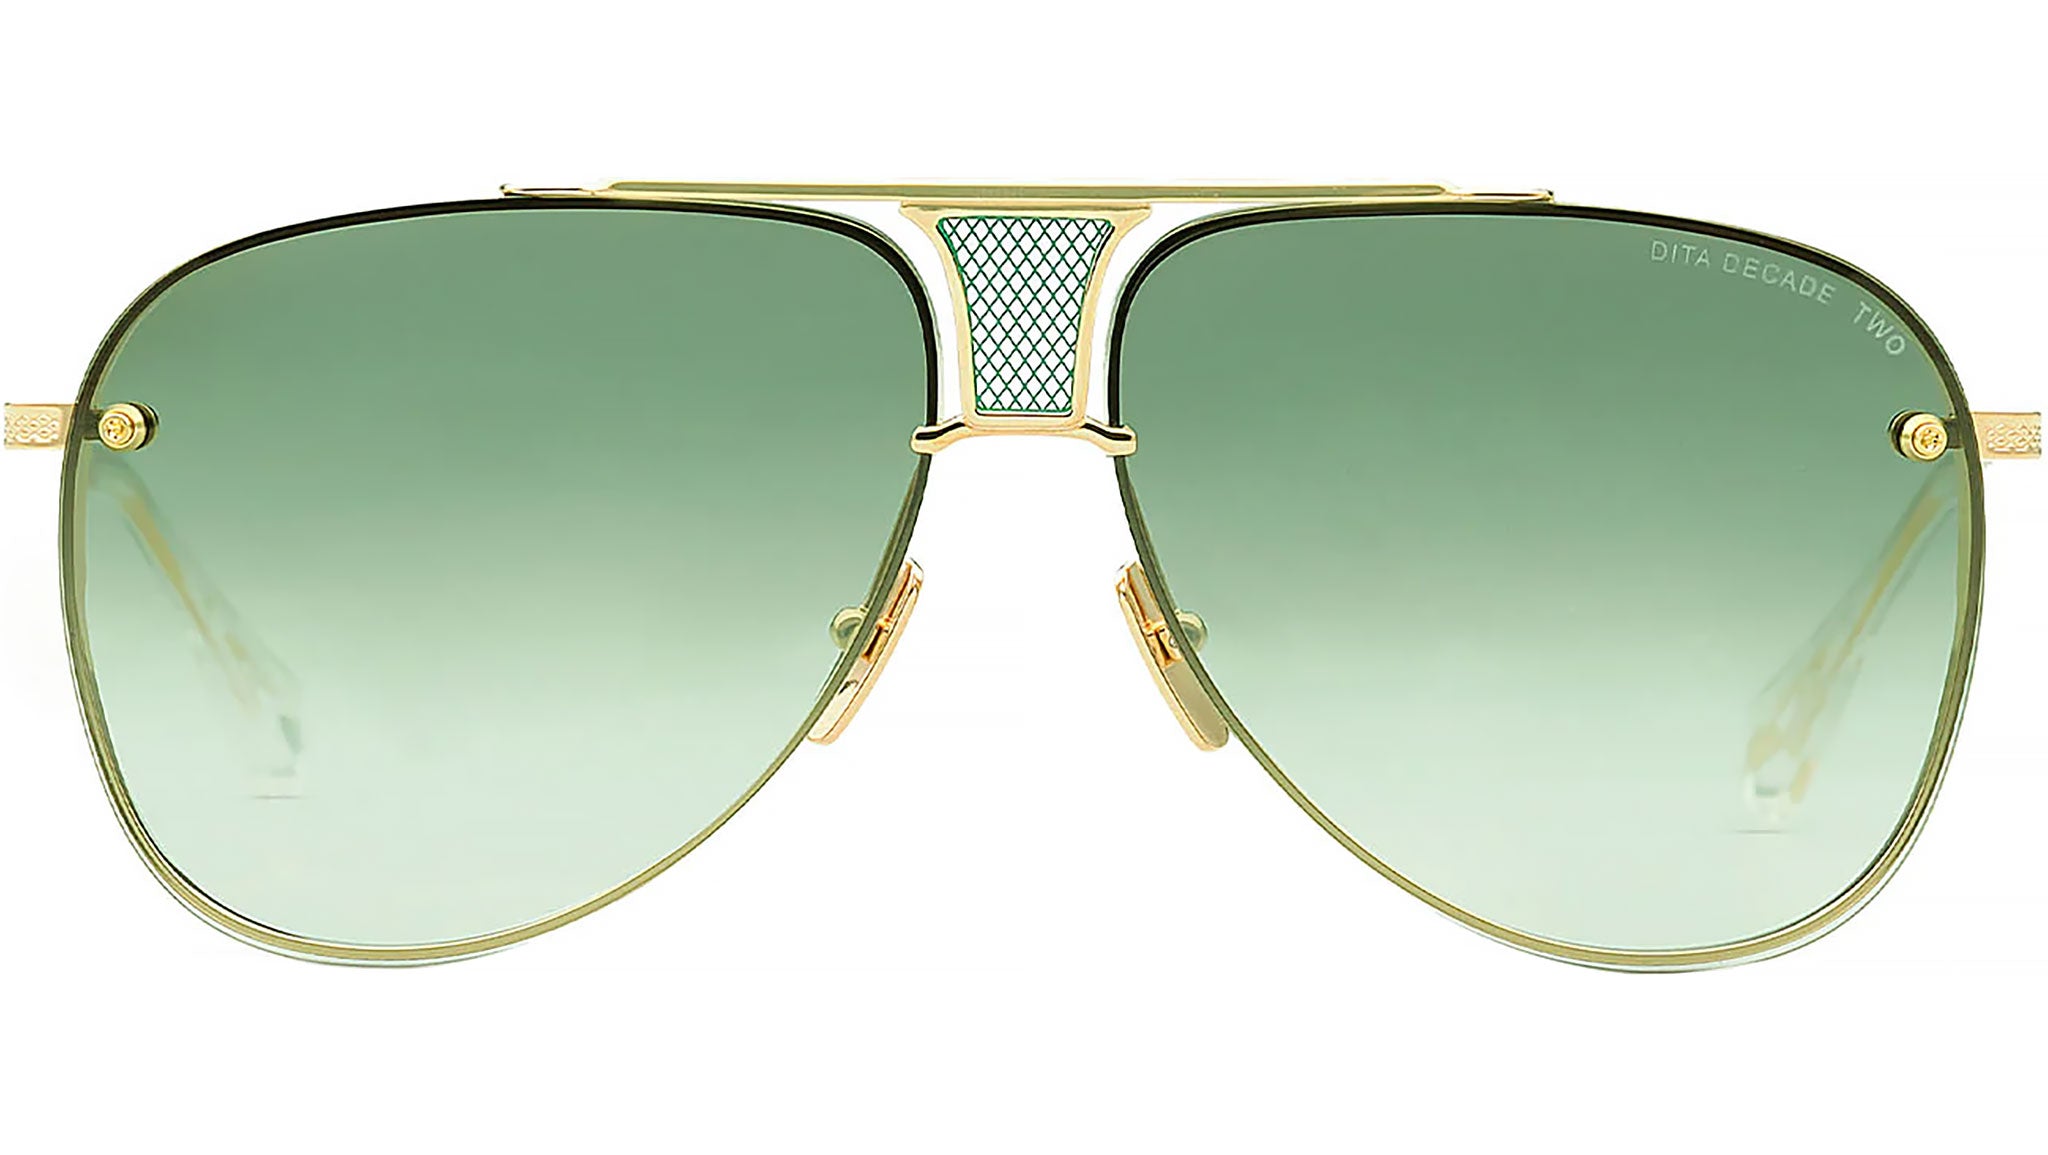 These $18 sunnies look just like Bottega Veneta's popular $440 aviator style